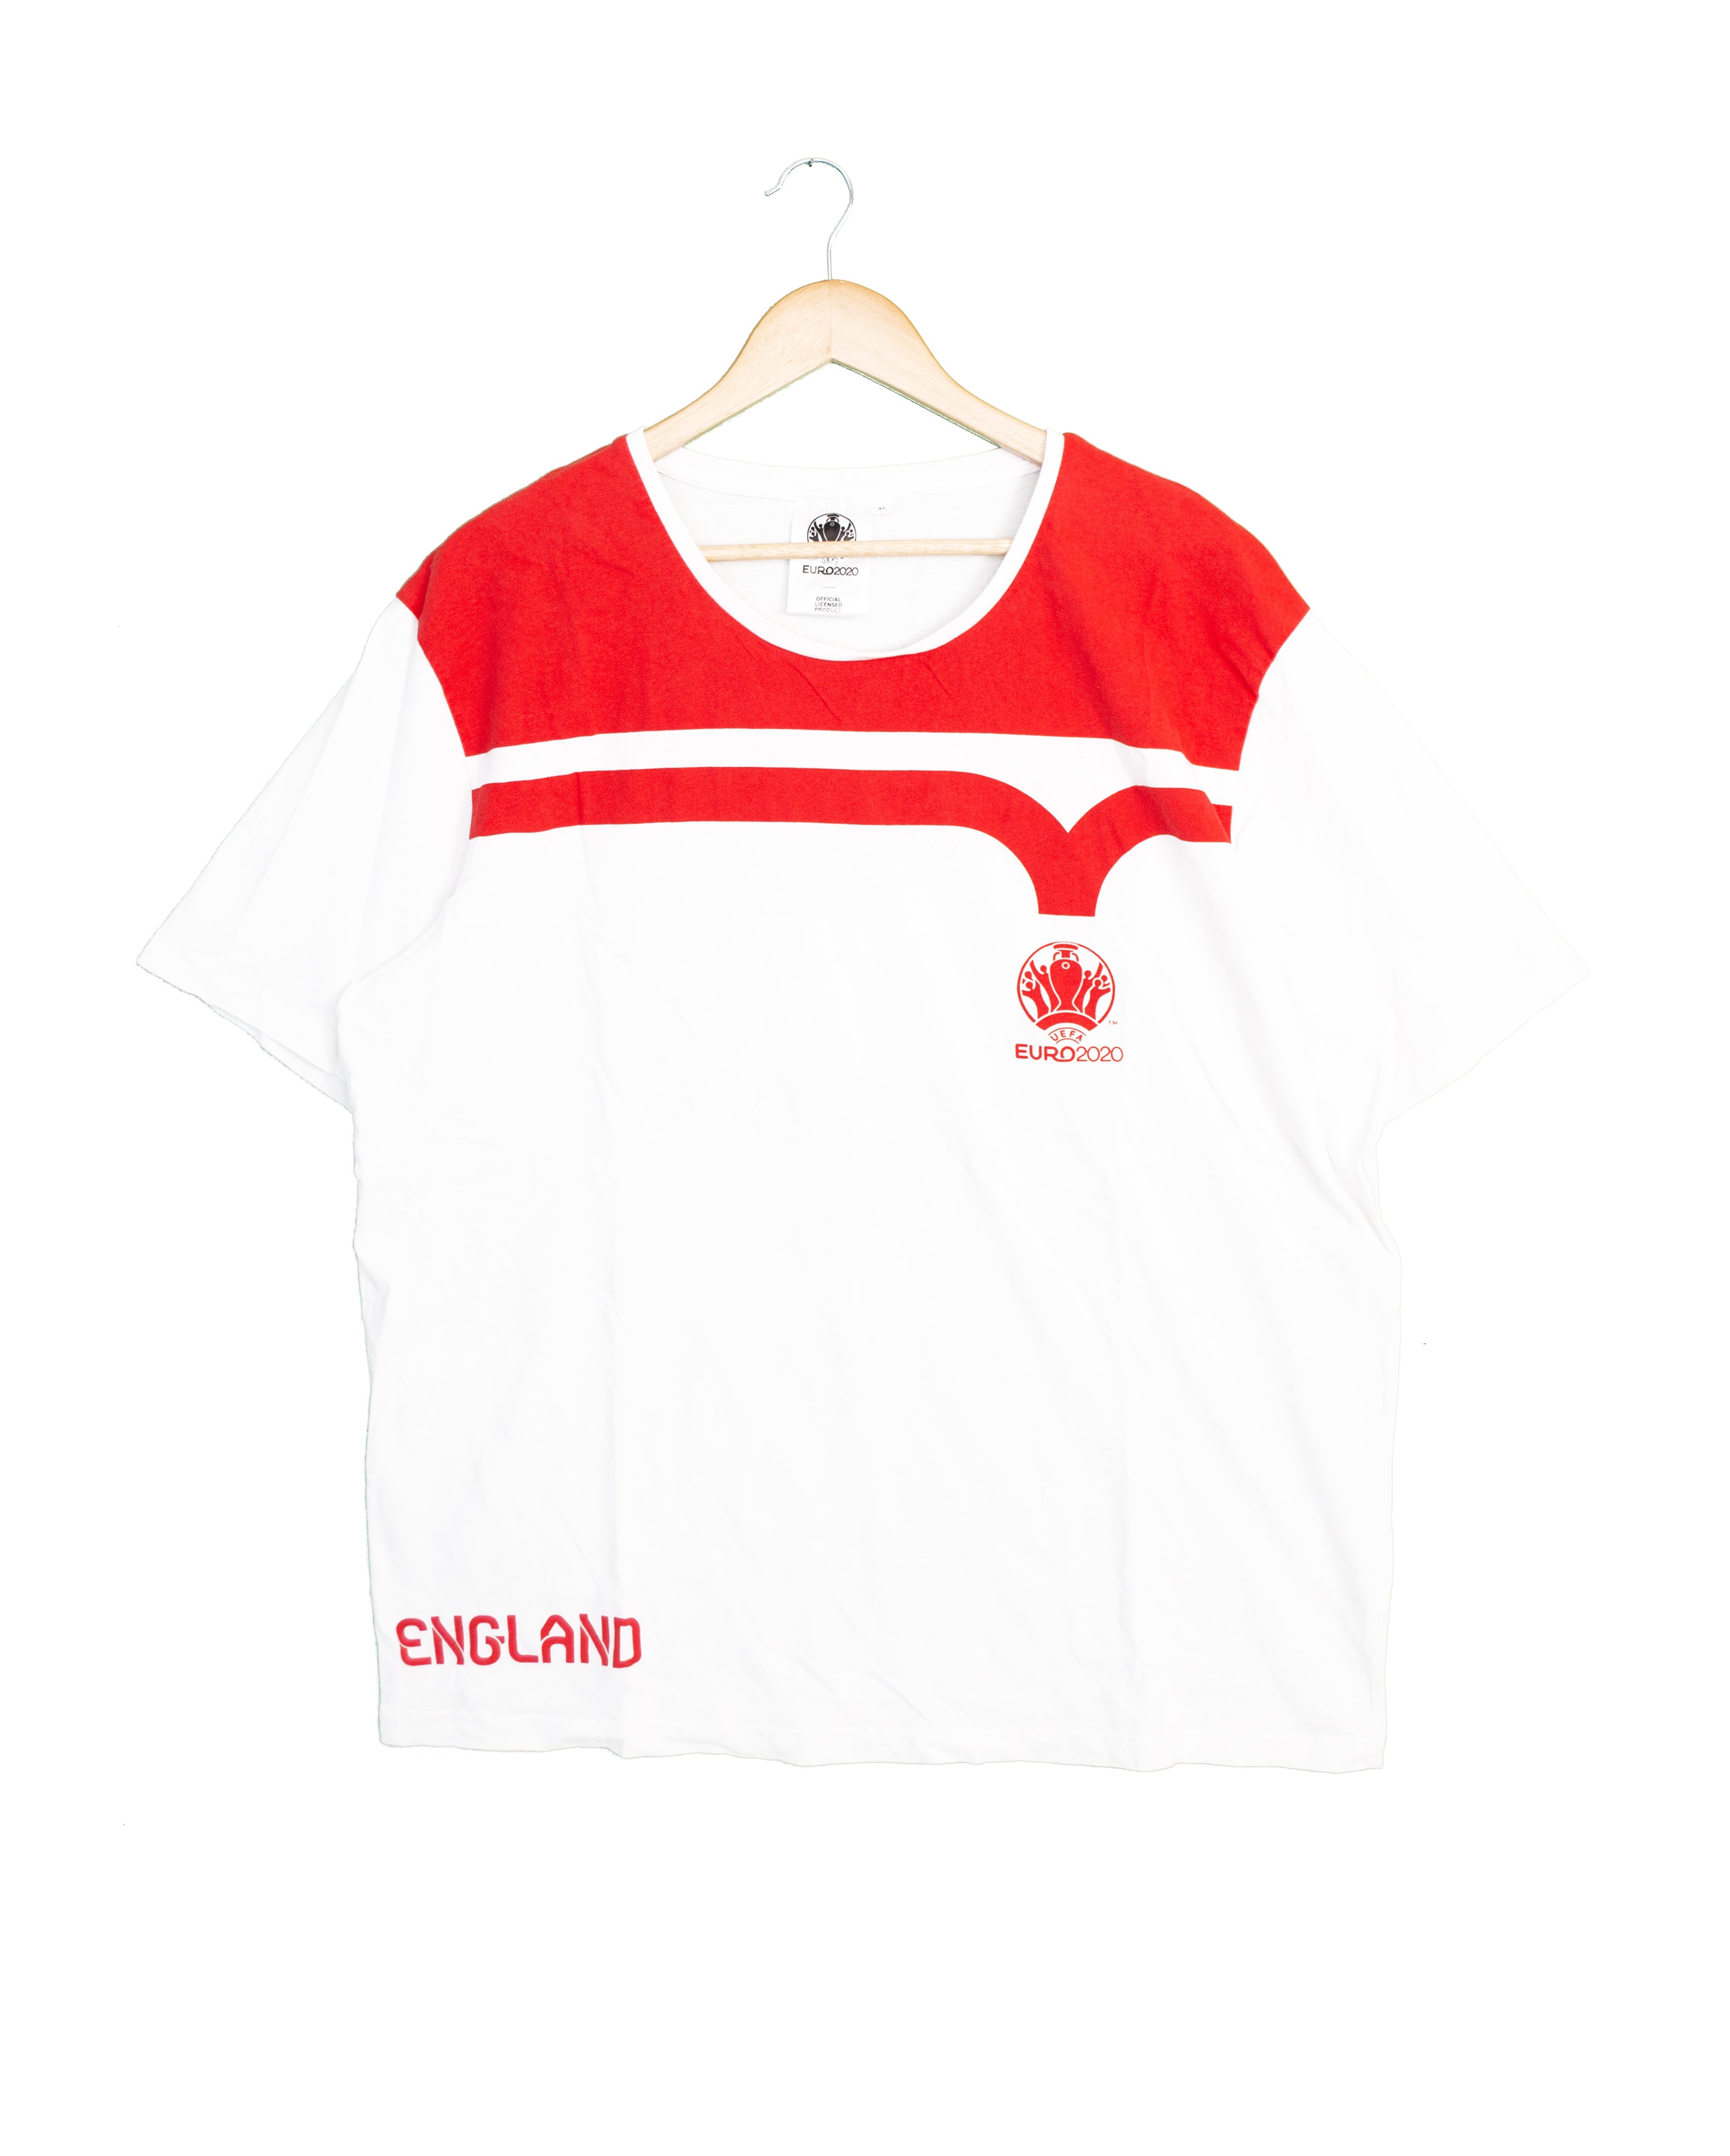 England 'Euro 2020' Fan Tee - XL - #1708